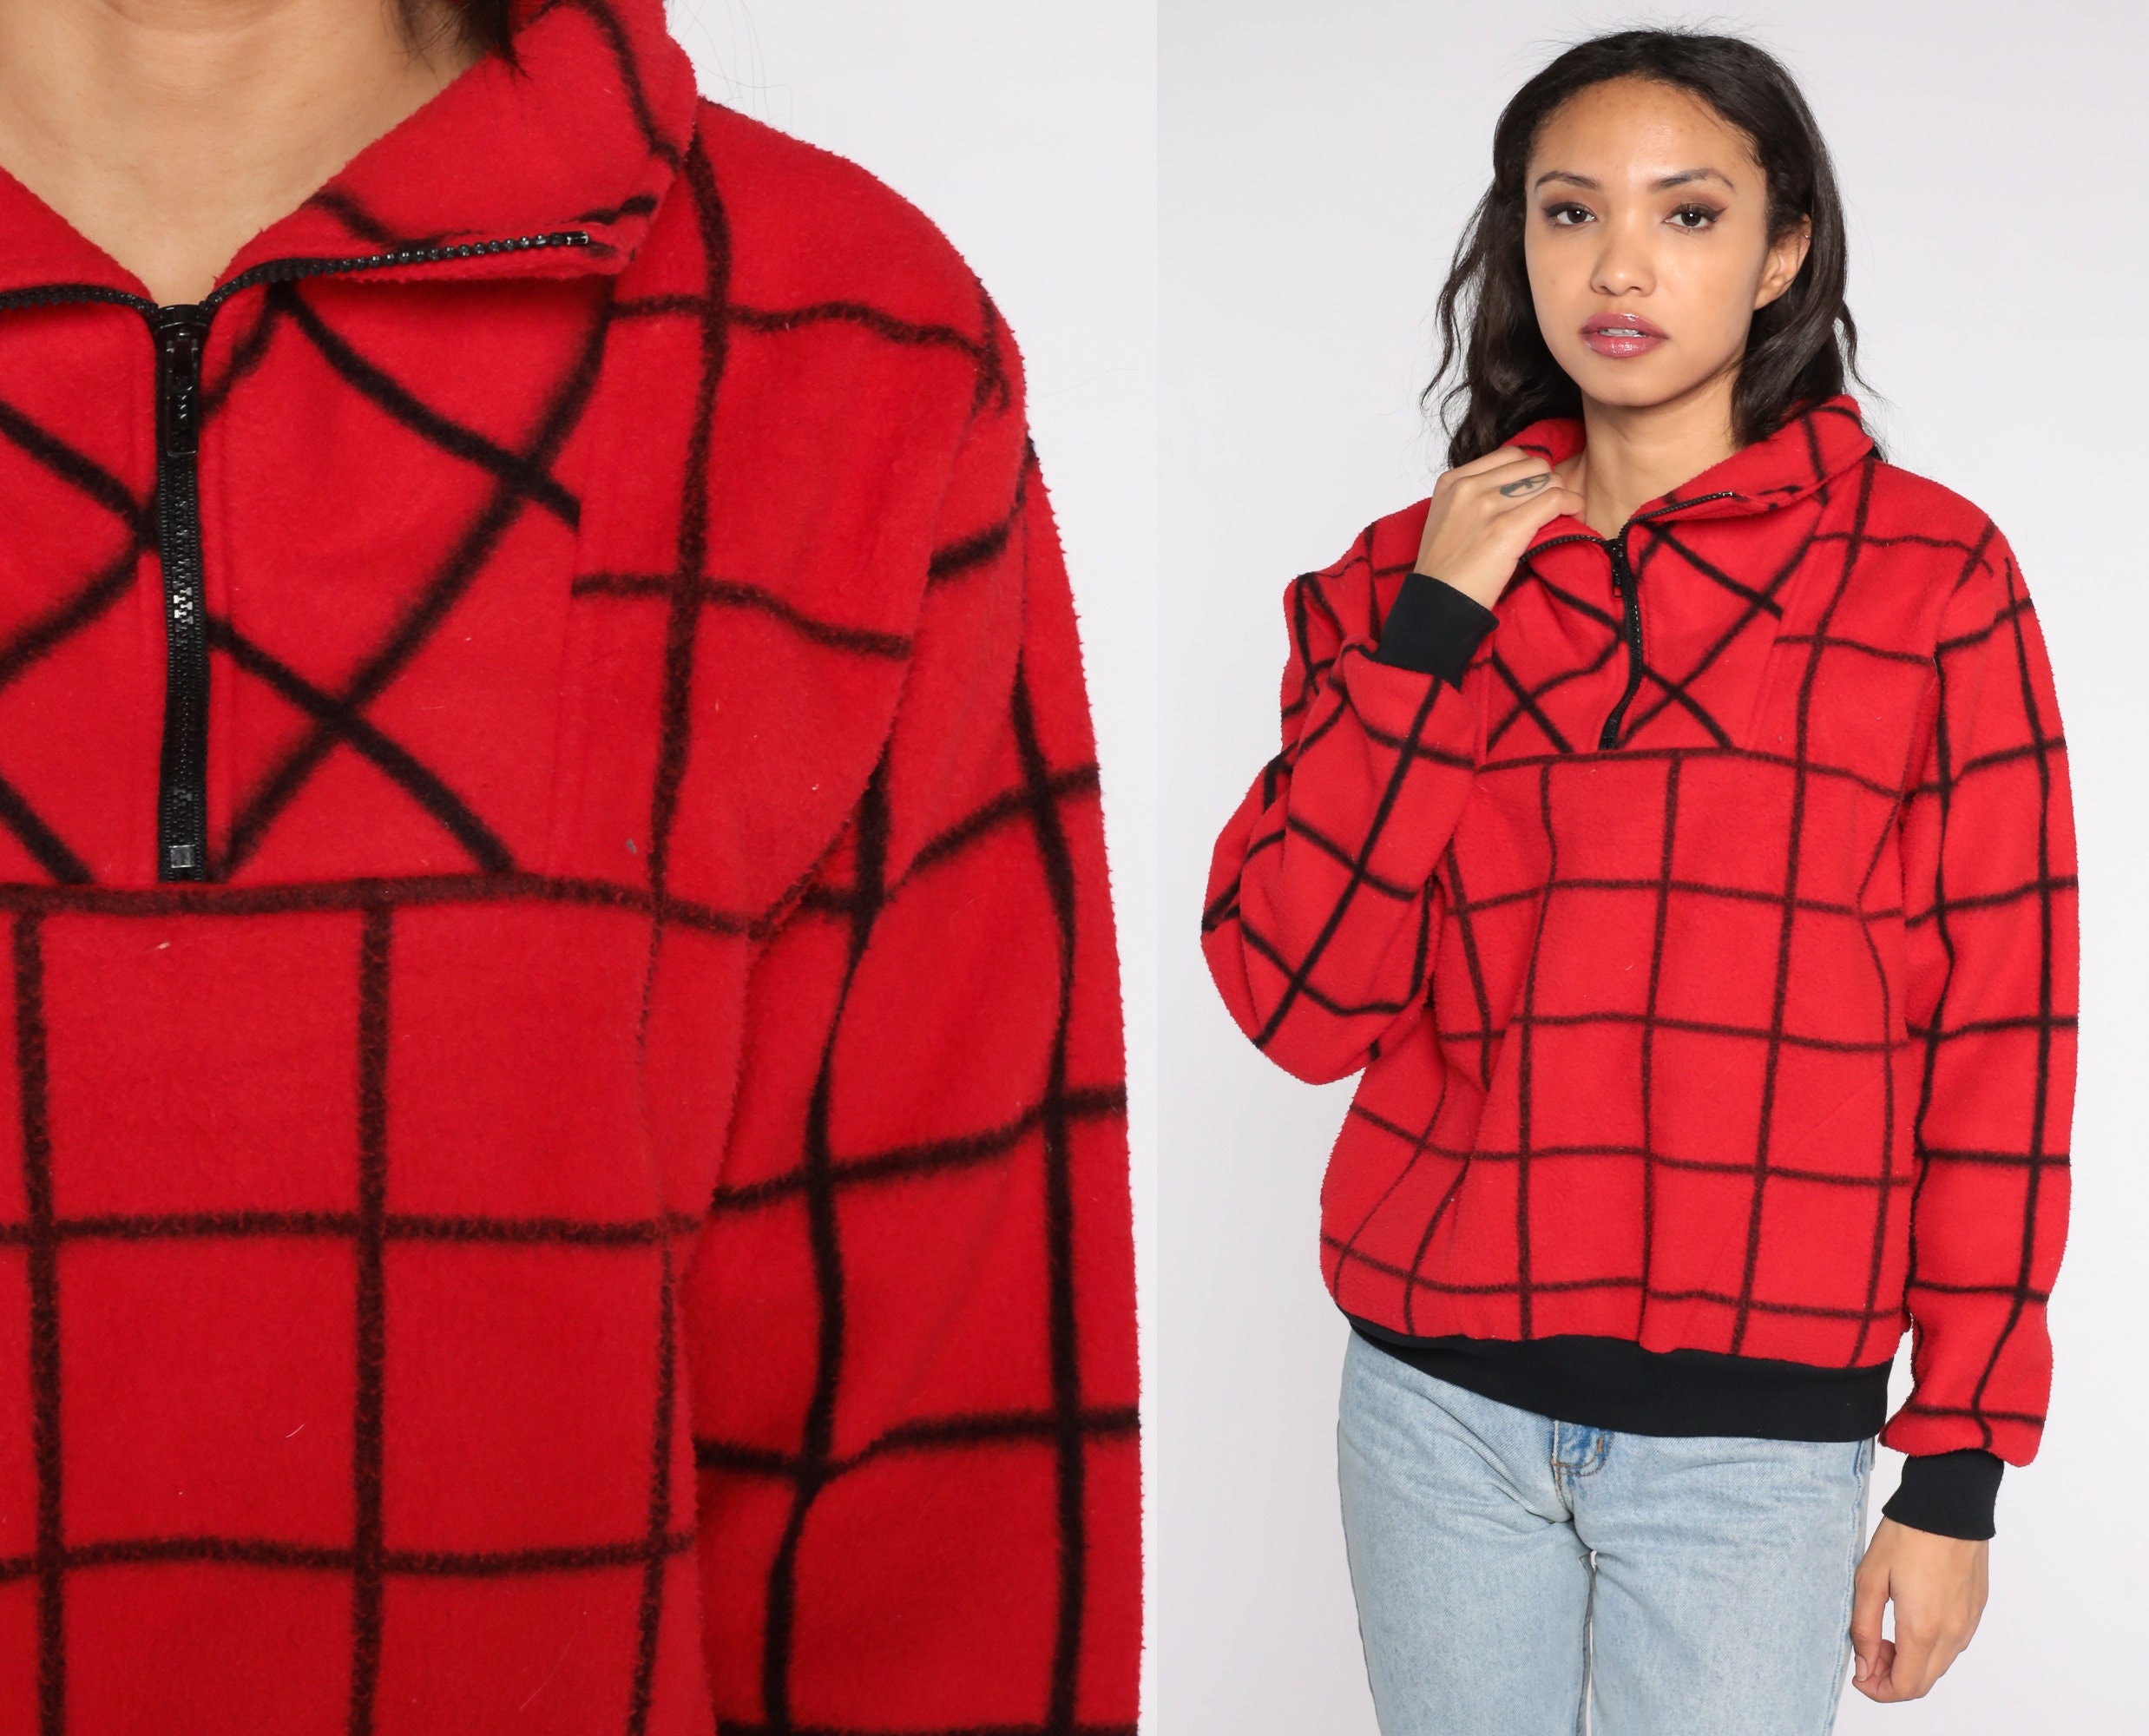 Checkered Fleece Sweatshirt 80s Red Grid Pattern Jacket - Etsy Hong Kong